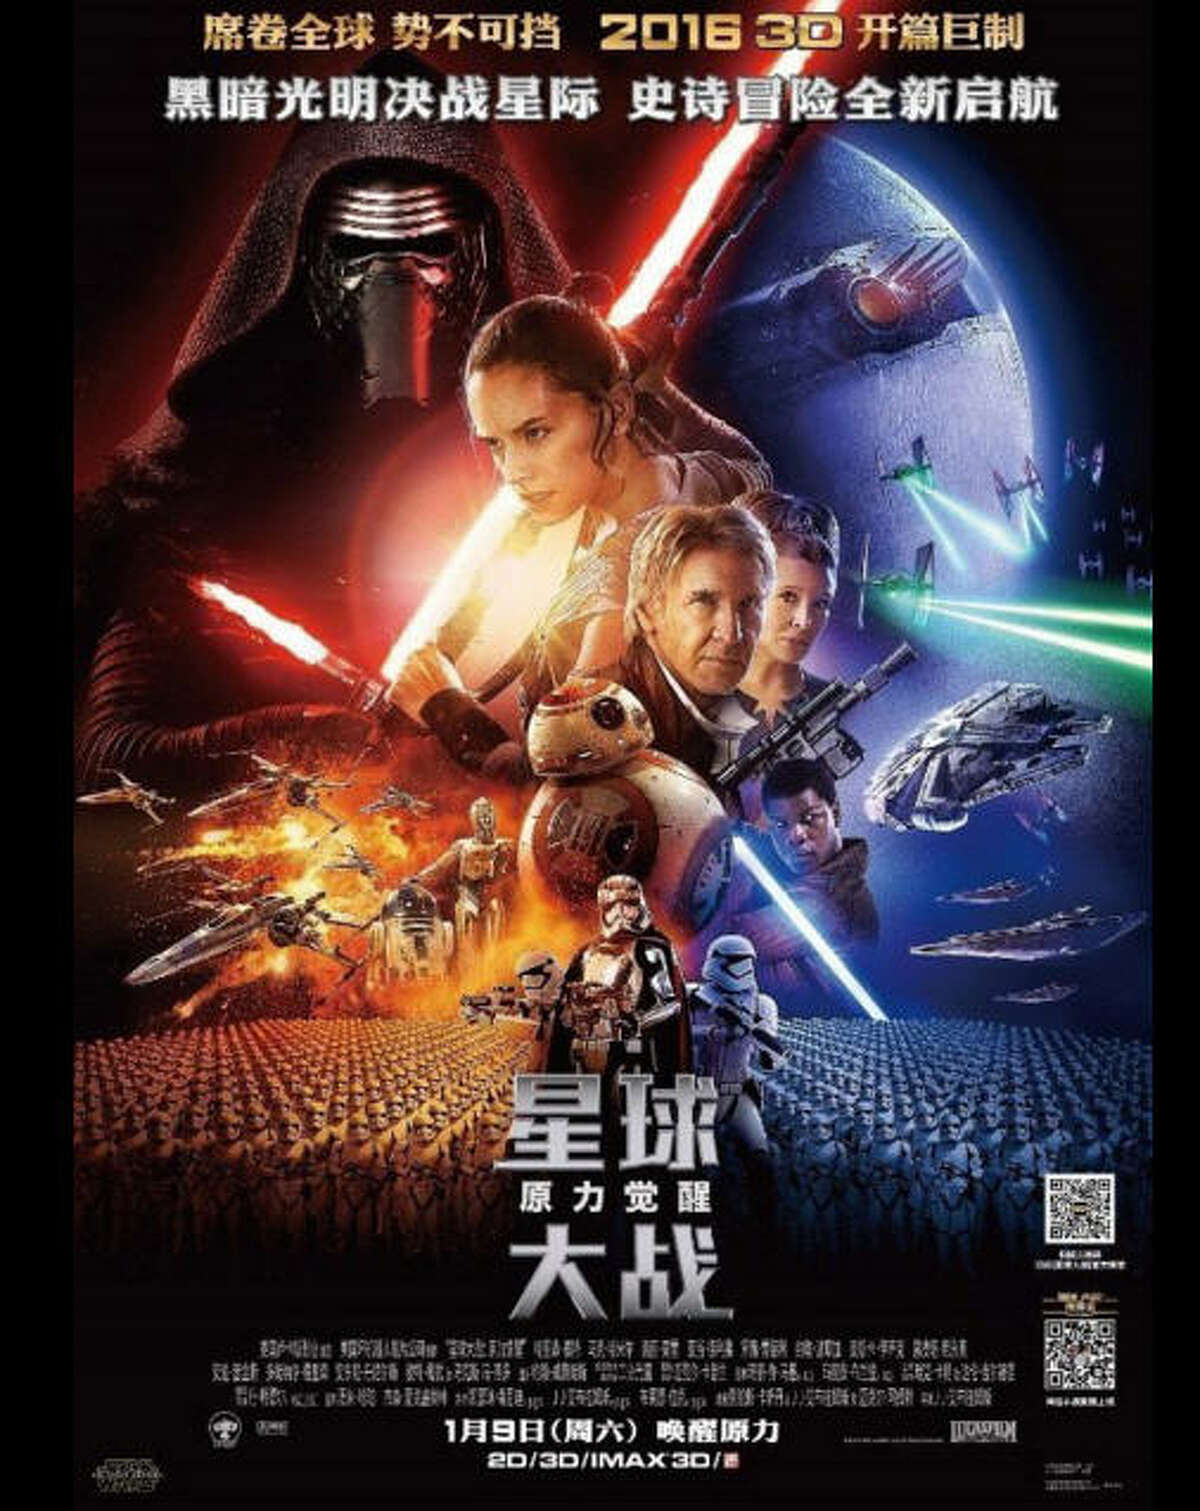 Deter Leed applaus Star Wars' poster shrinks black actor in Chinese version